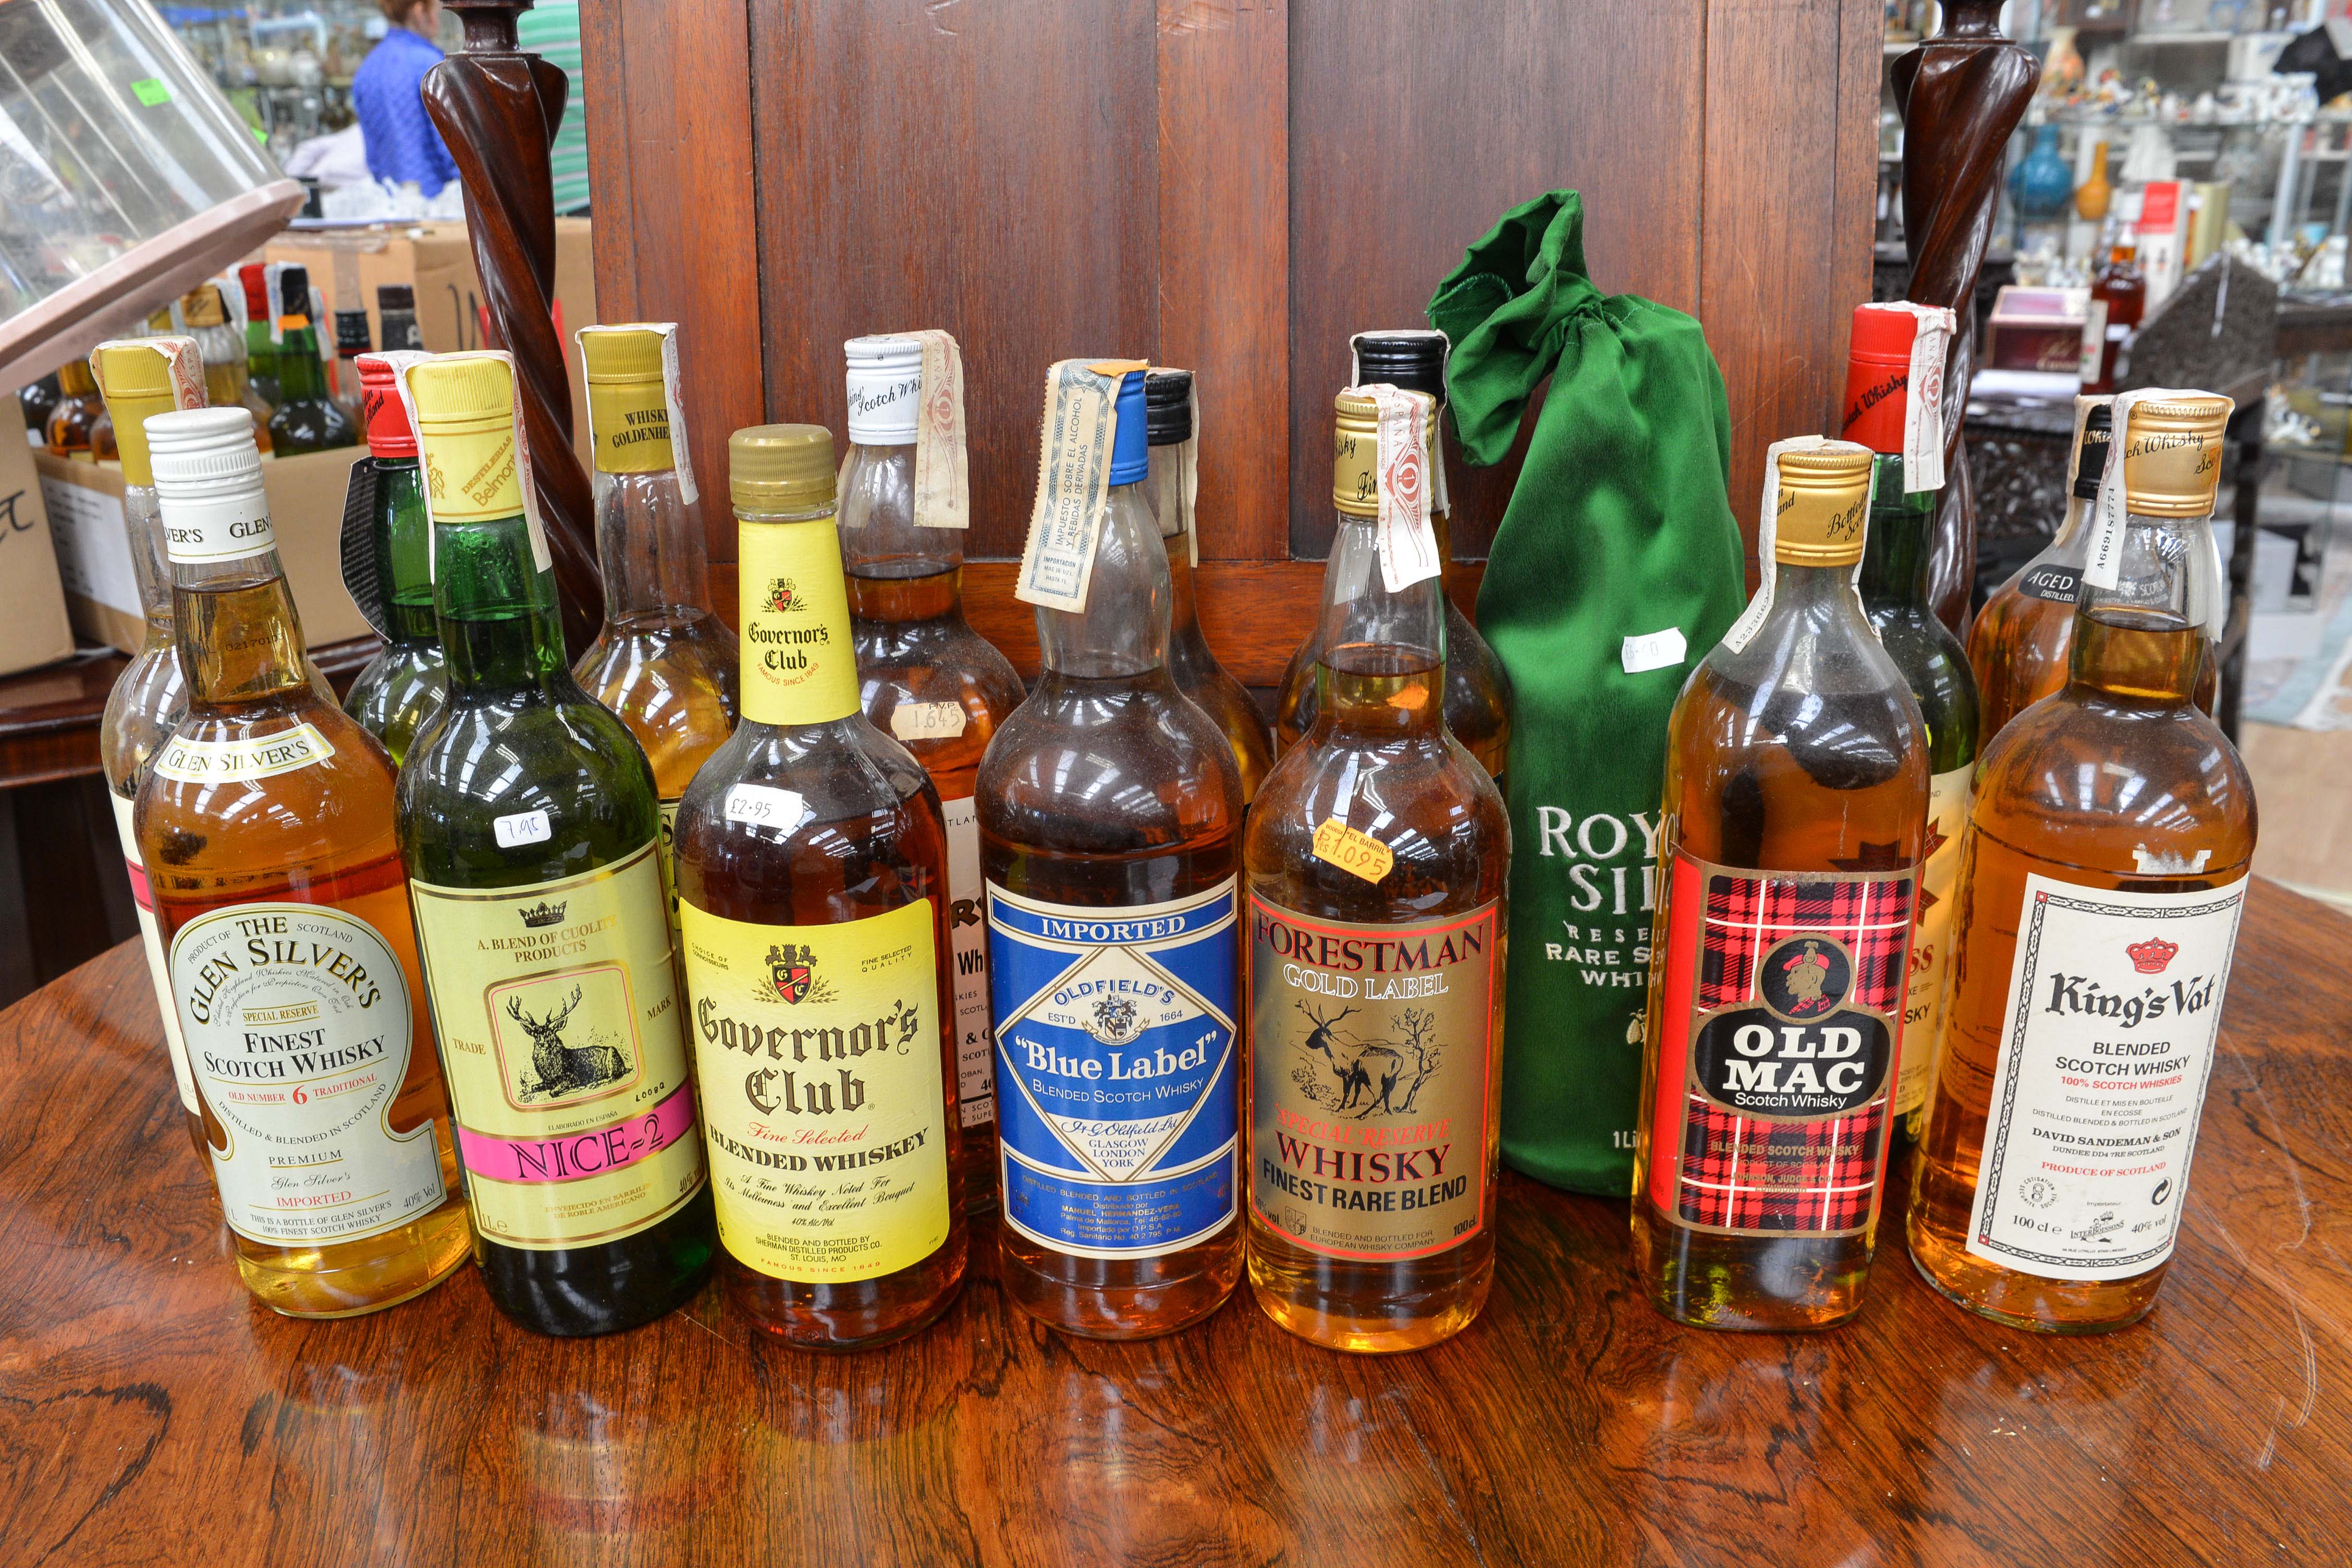 Whisky including Nice, Goldenheart, Glenlyon, Loch Castle, Royal Silk, Kinros, Glen Garry,